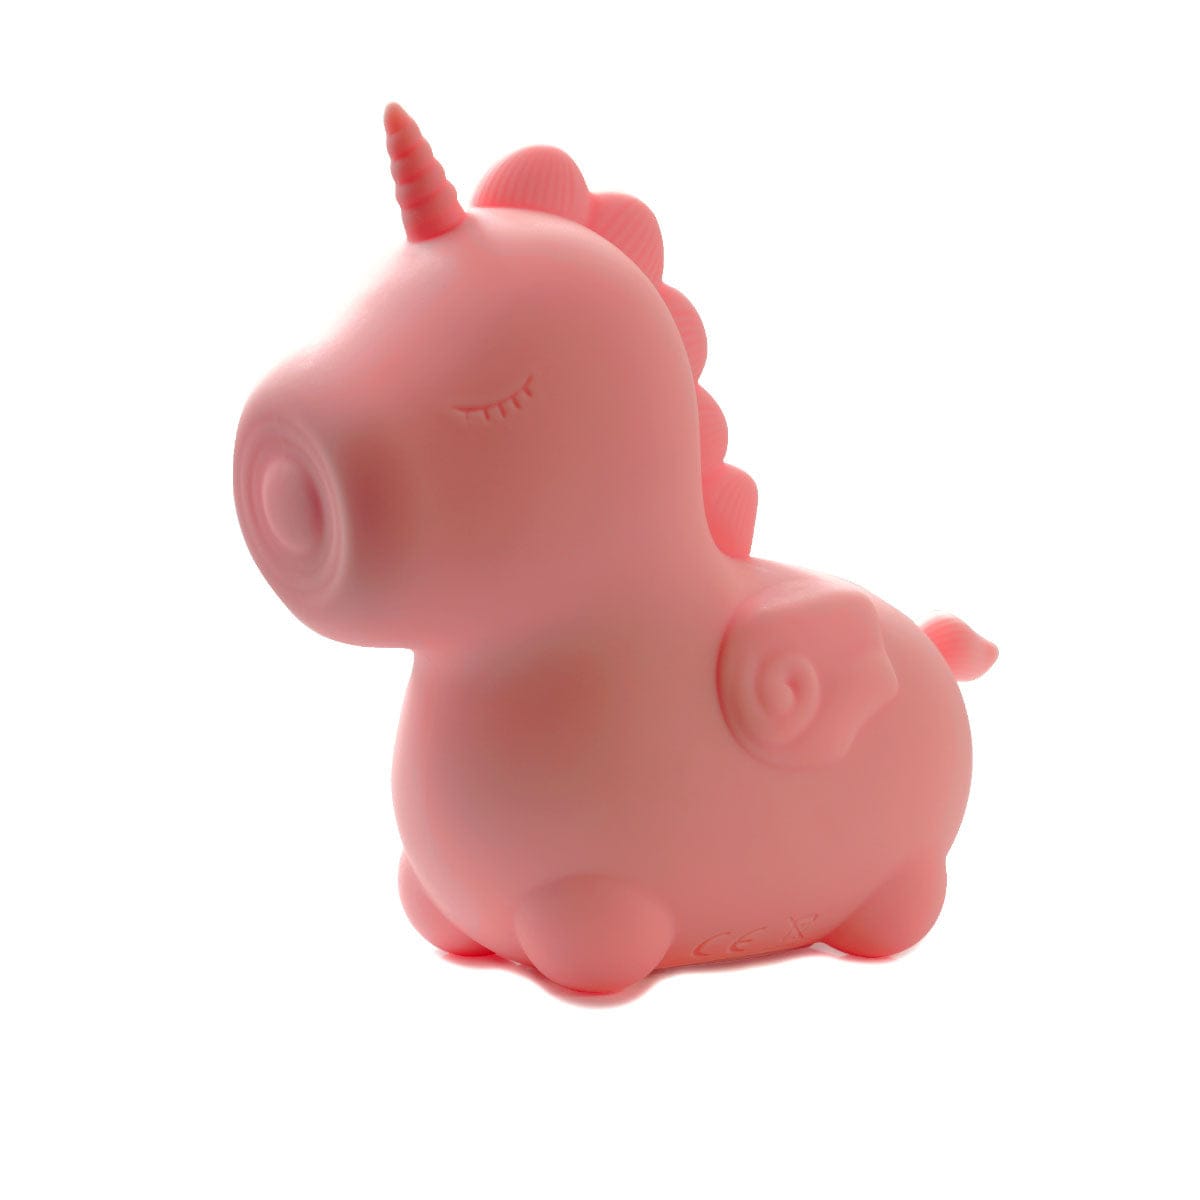 Unihorn® Mini Unicorn Vibe Heart Throb Pink - Rolik®